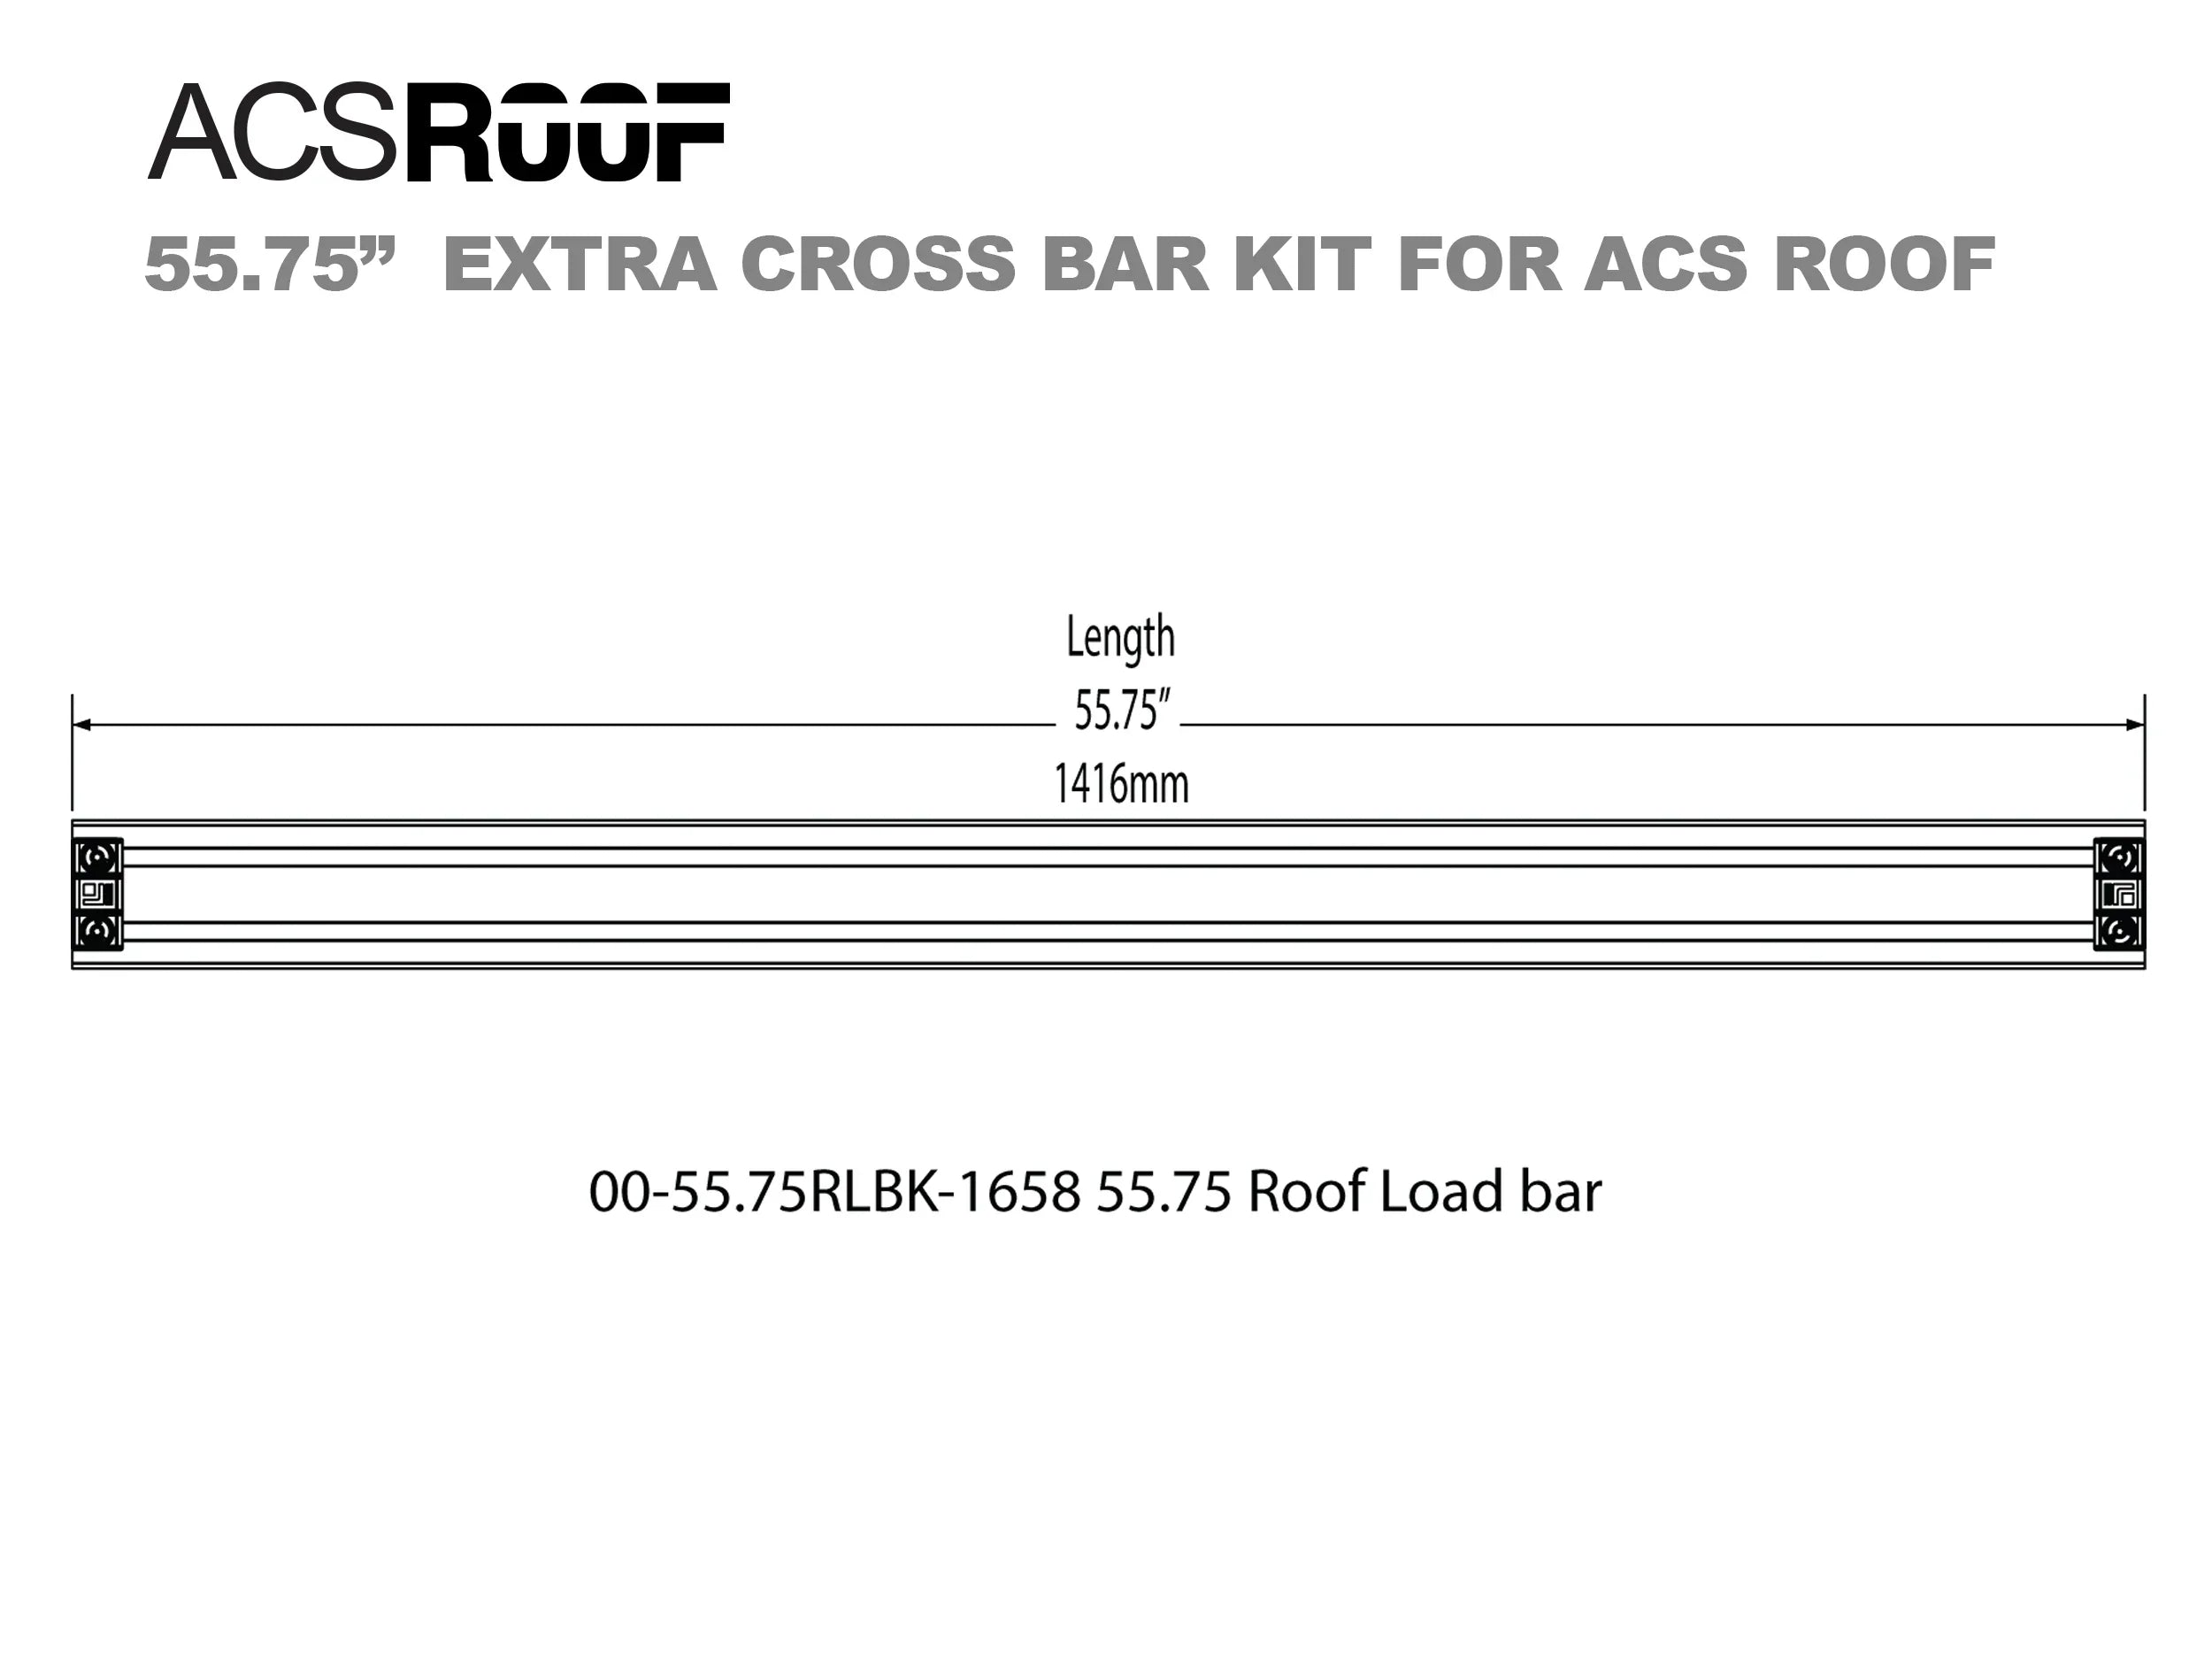 Leitner Designs ACS ROOF Extra Load Bar Kit Rack Accessories - Modula Racks